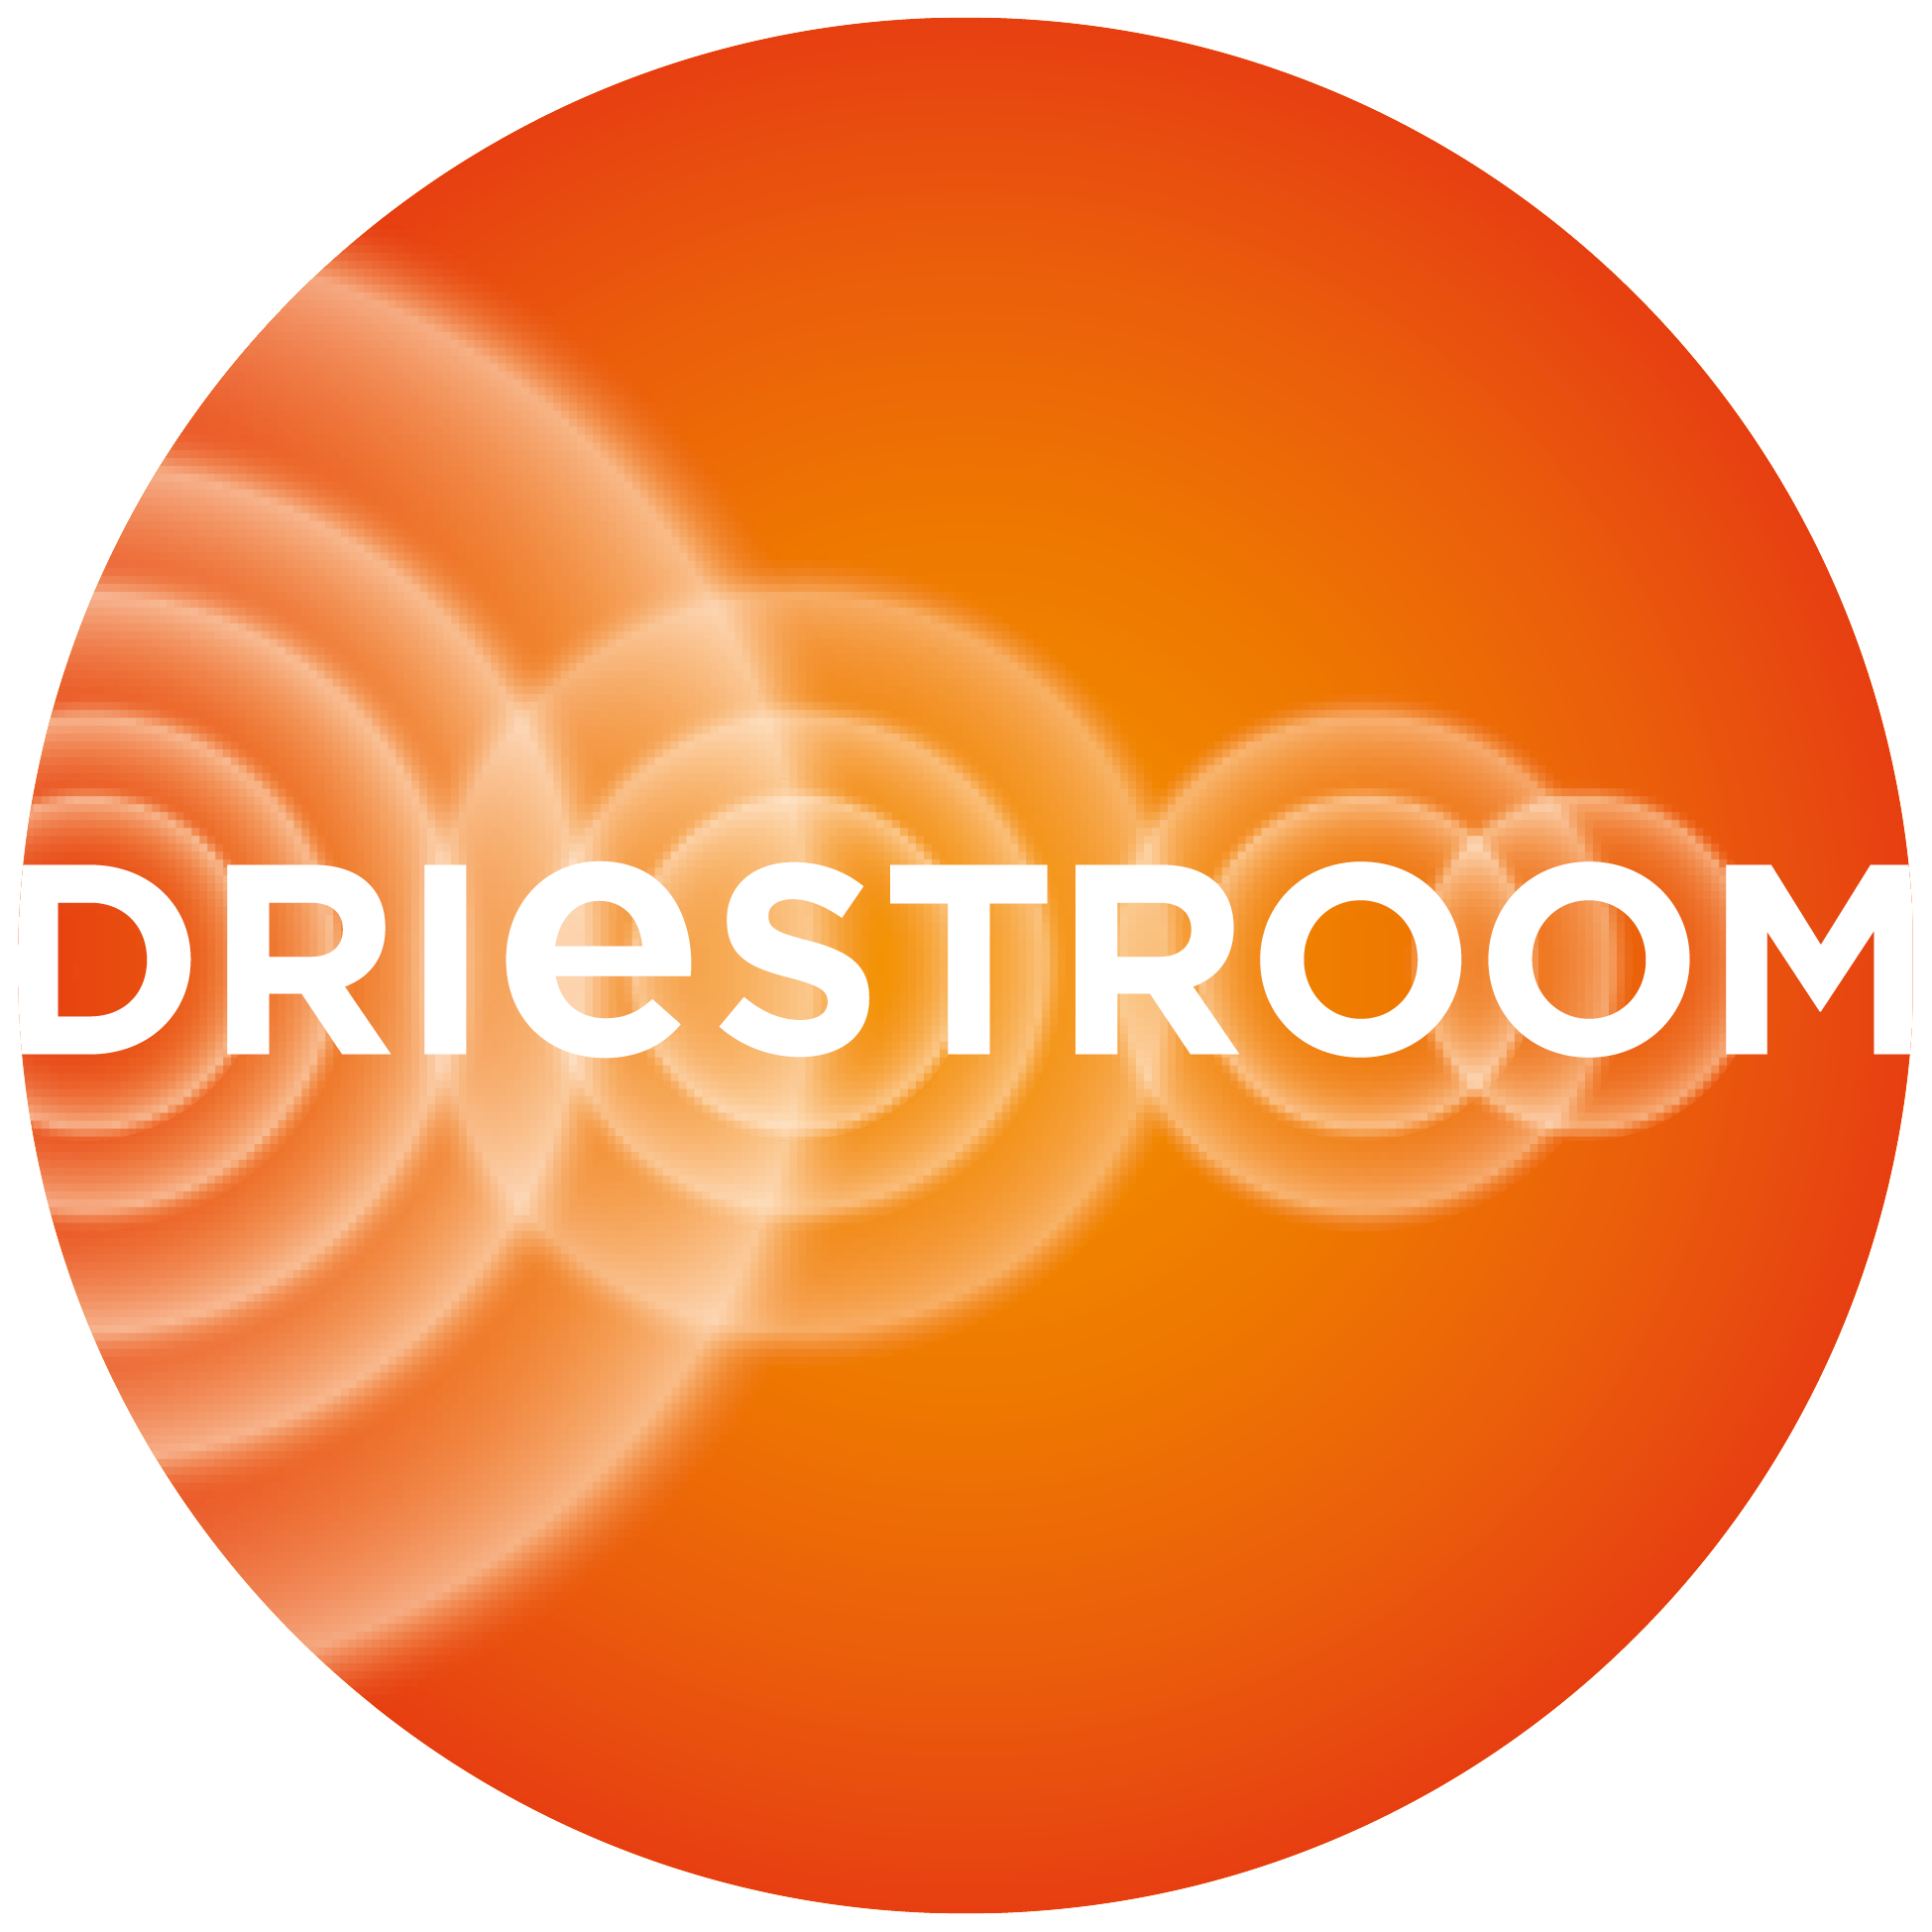 Driestroom logo